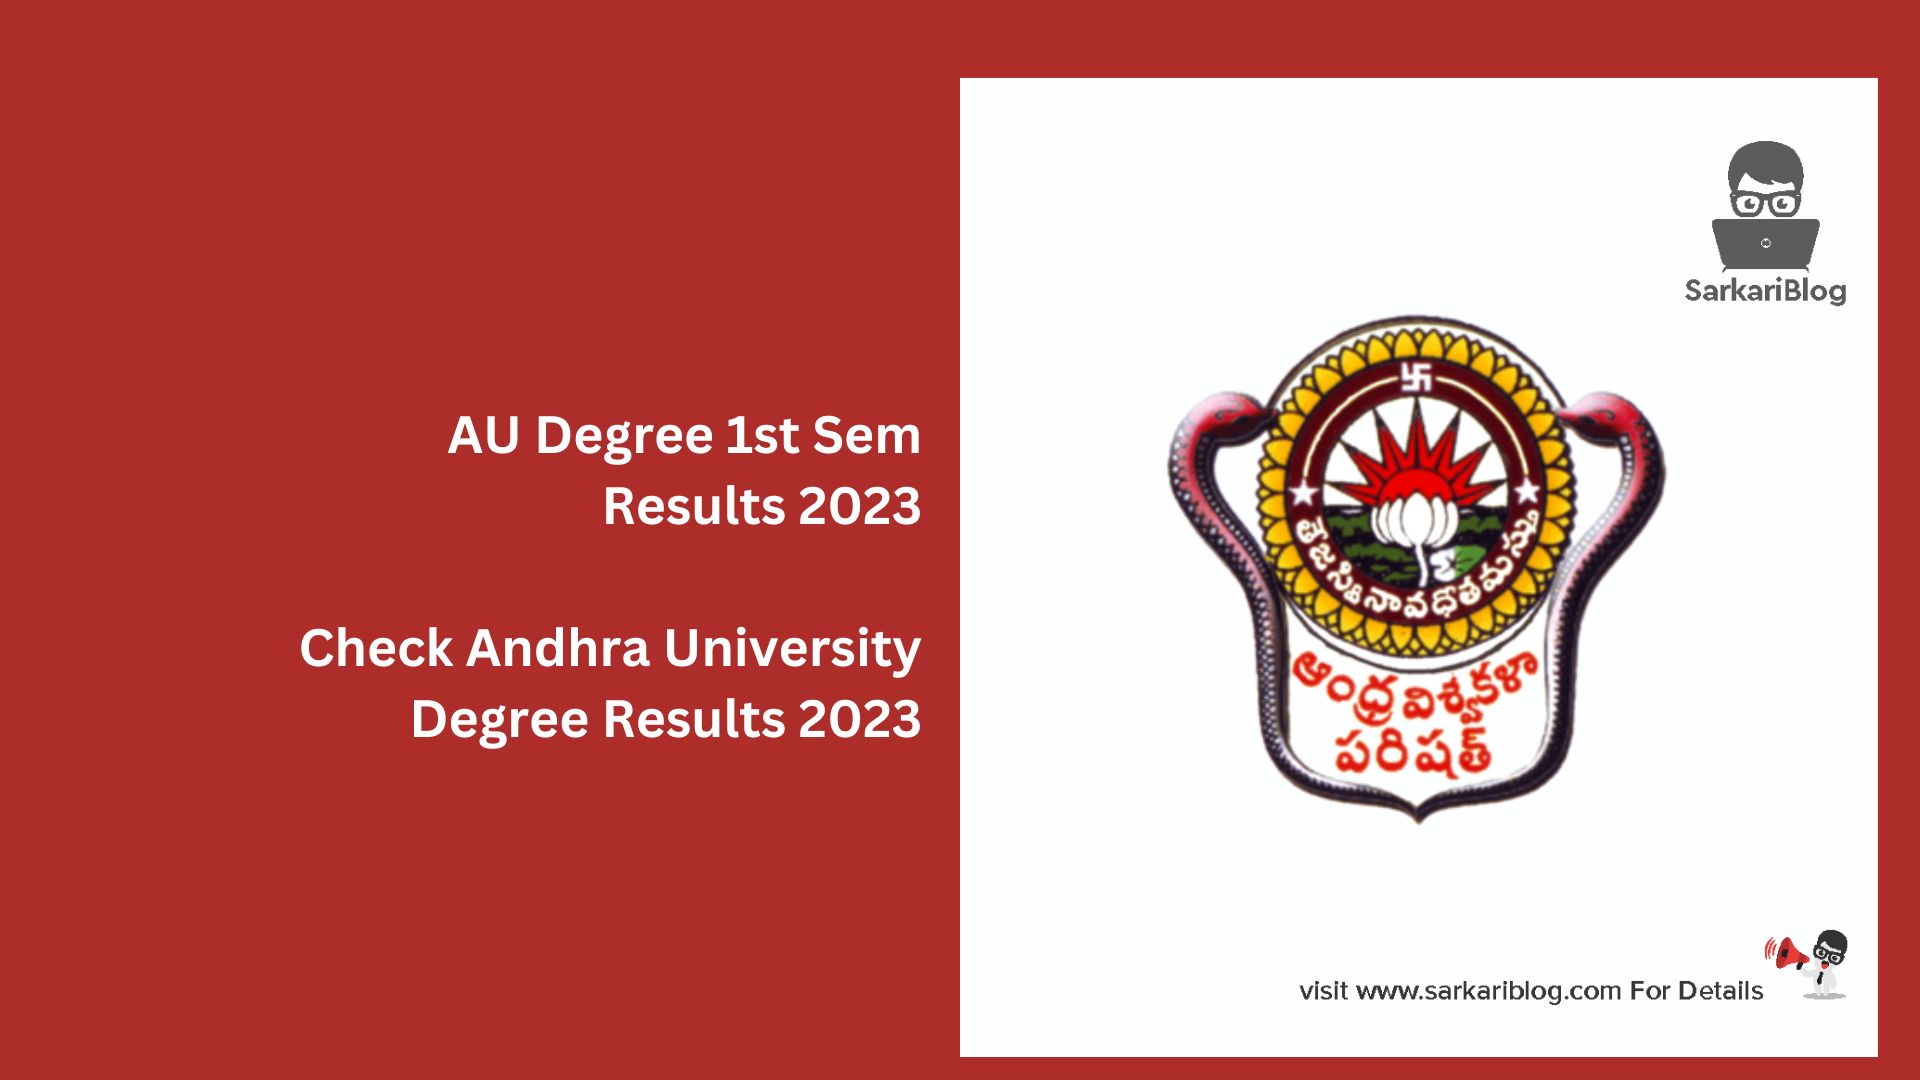 AU Degree 1st Sem Results 2023